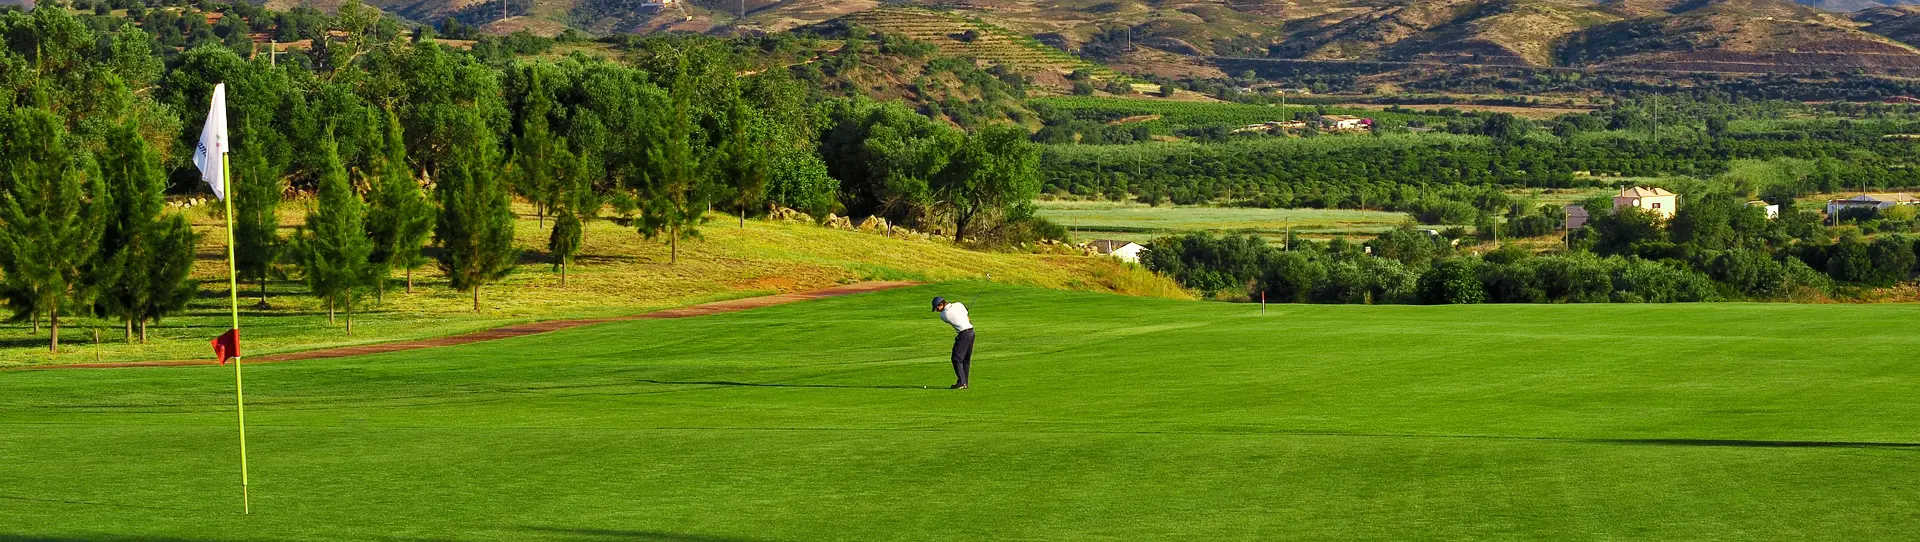 Portugal golf courses - Benamor Golf Course - Photo 2